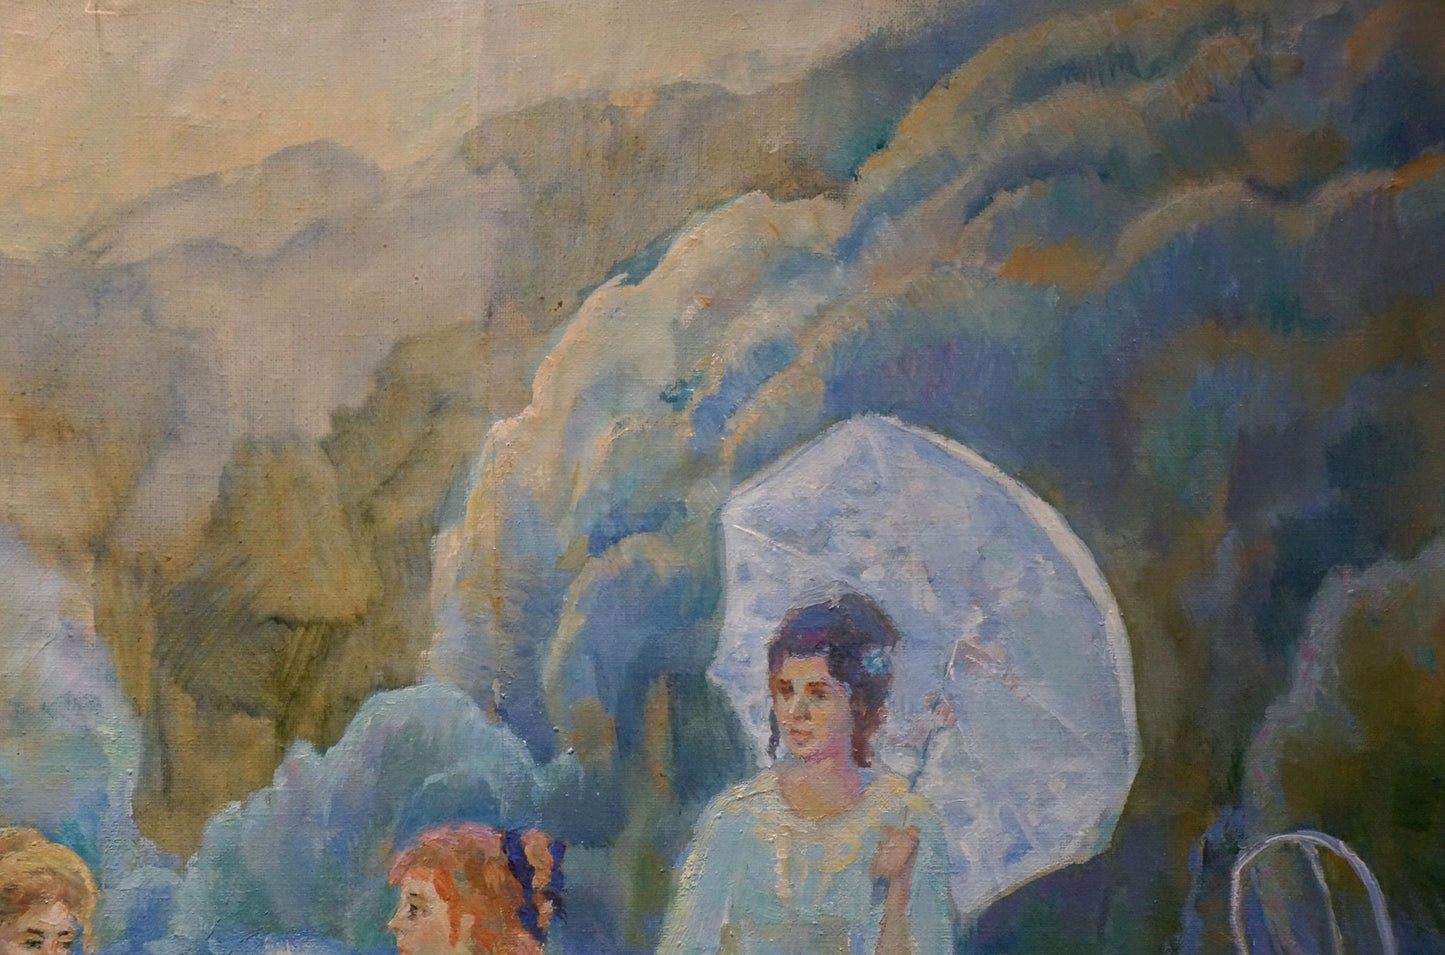 Odarka Tytarenko's oil painting "Girls by the Pond"